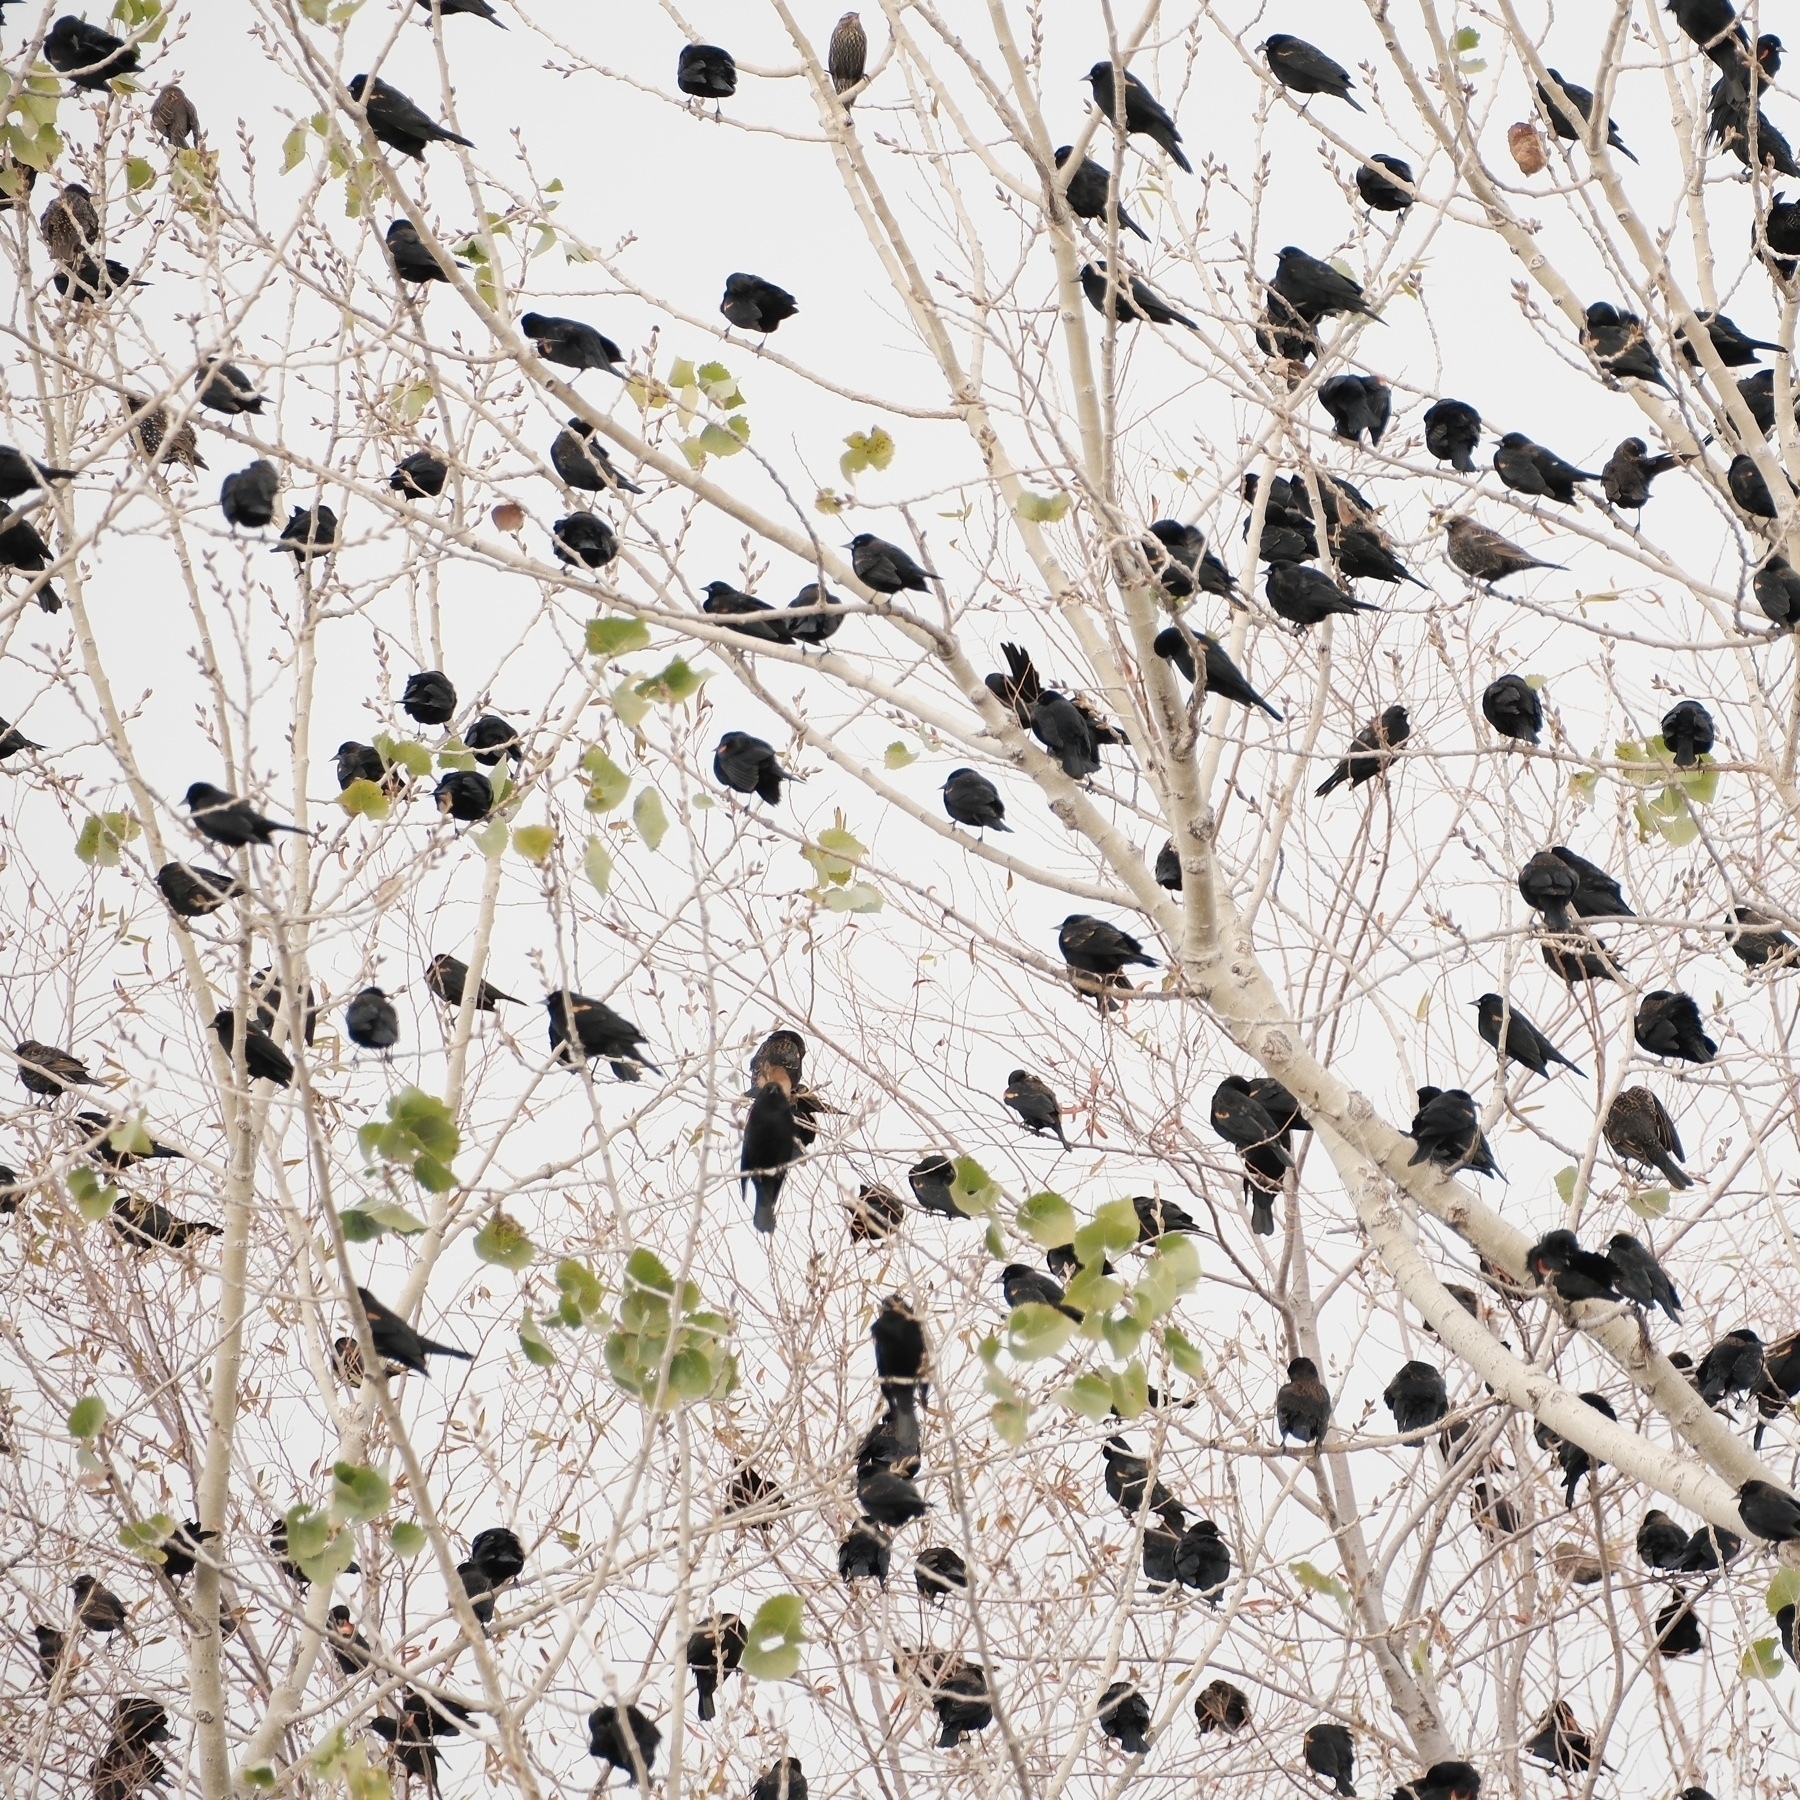 dozens of black birds in a bare tree top